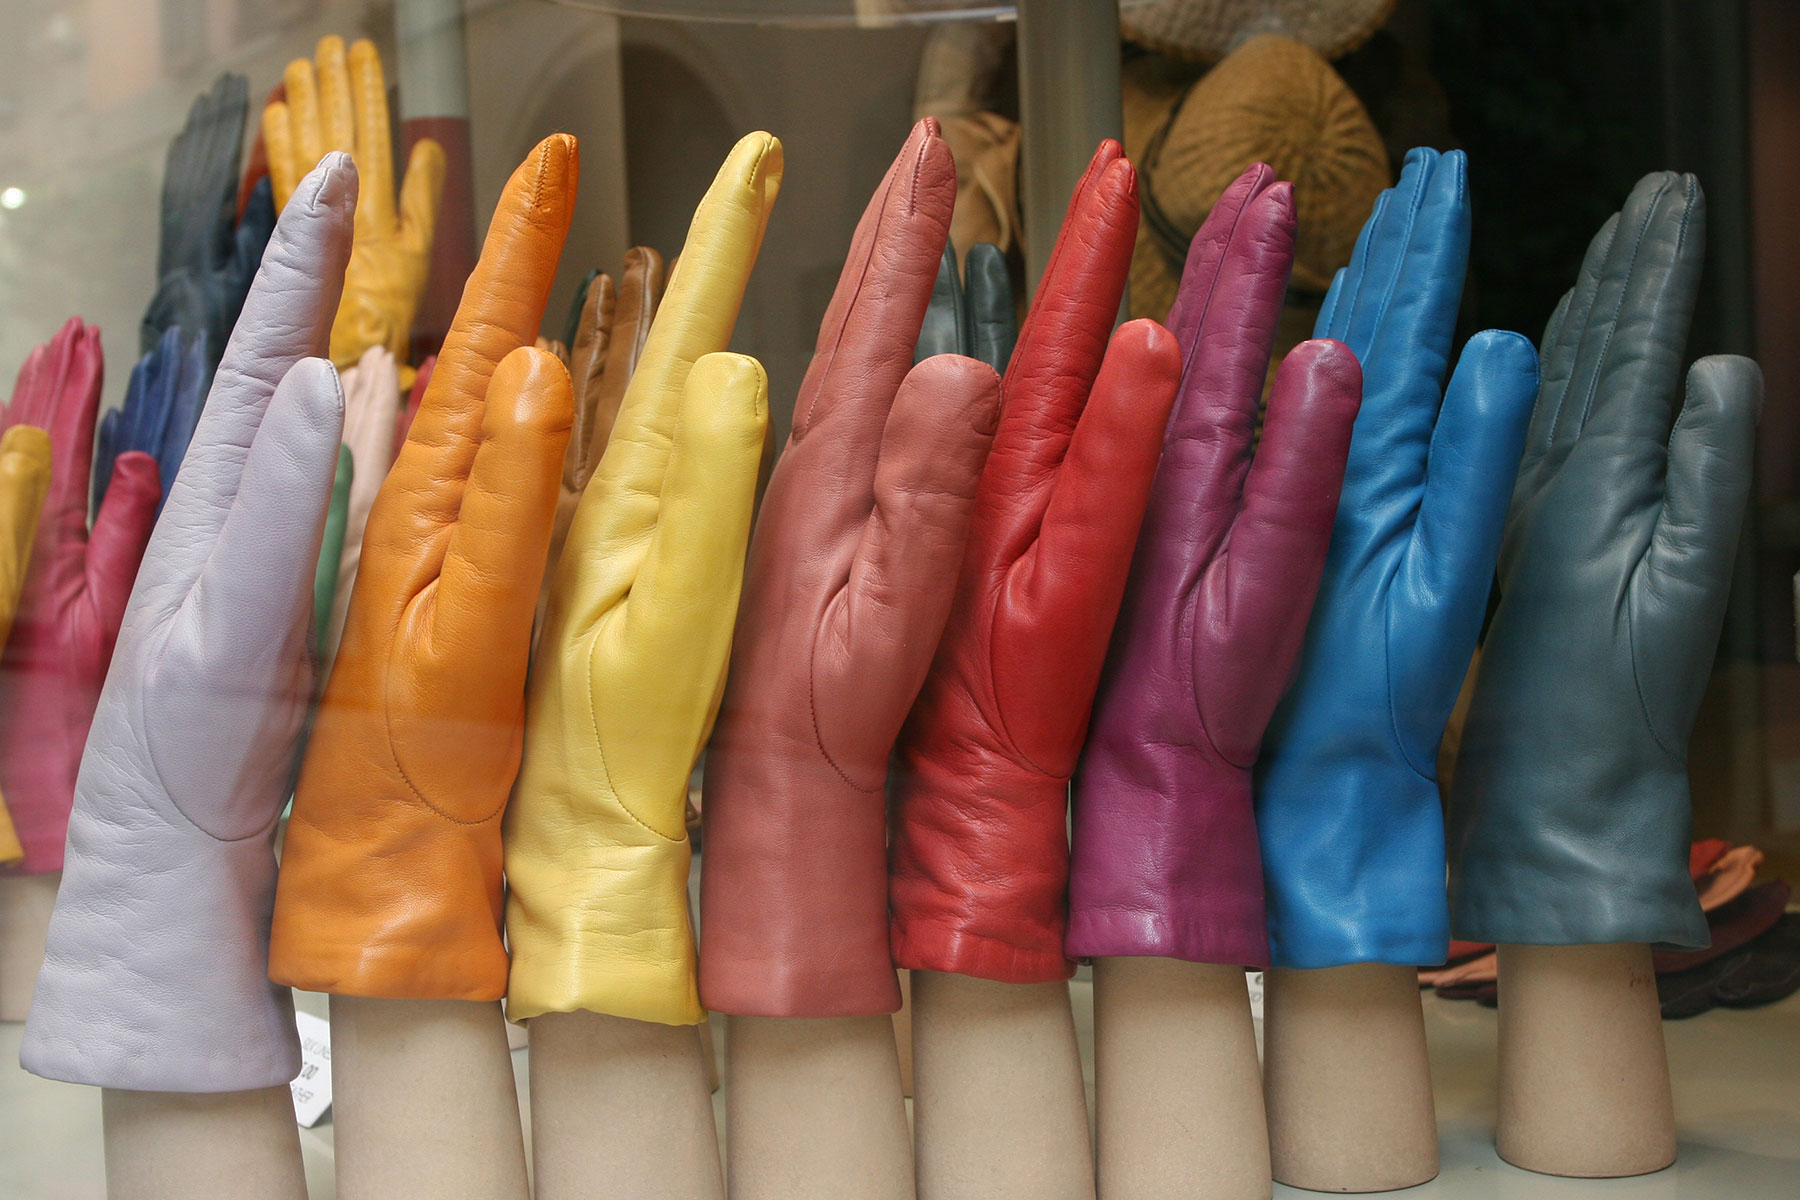 How to make touchscreen-sensitive gloves